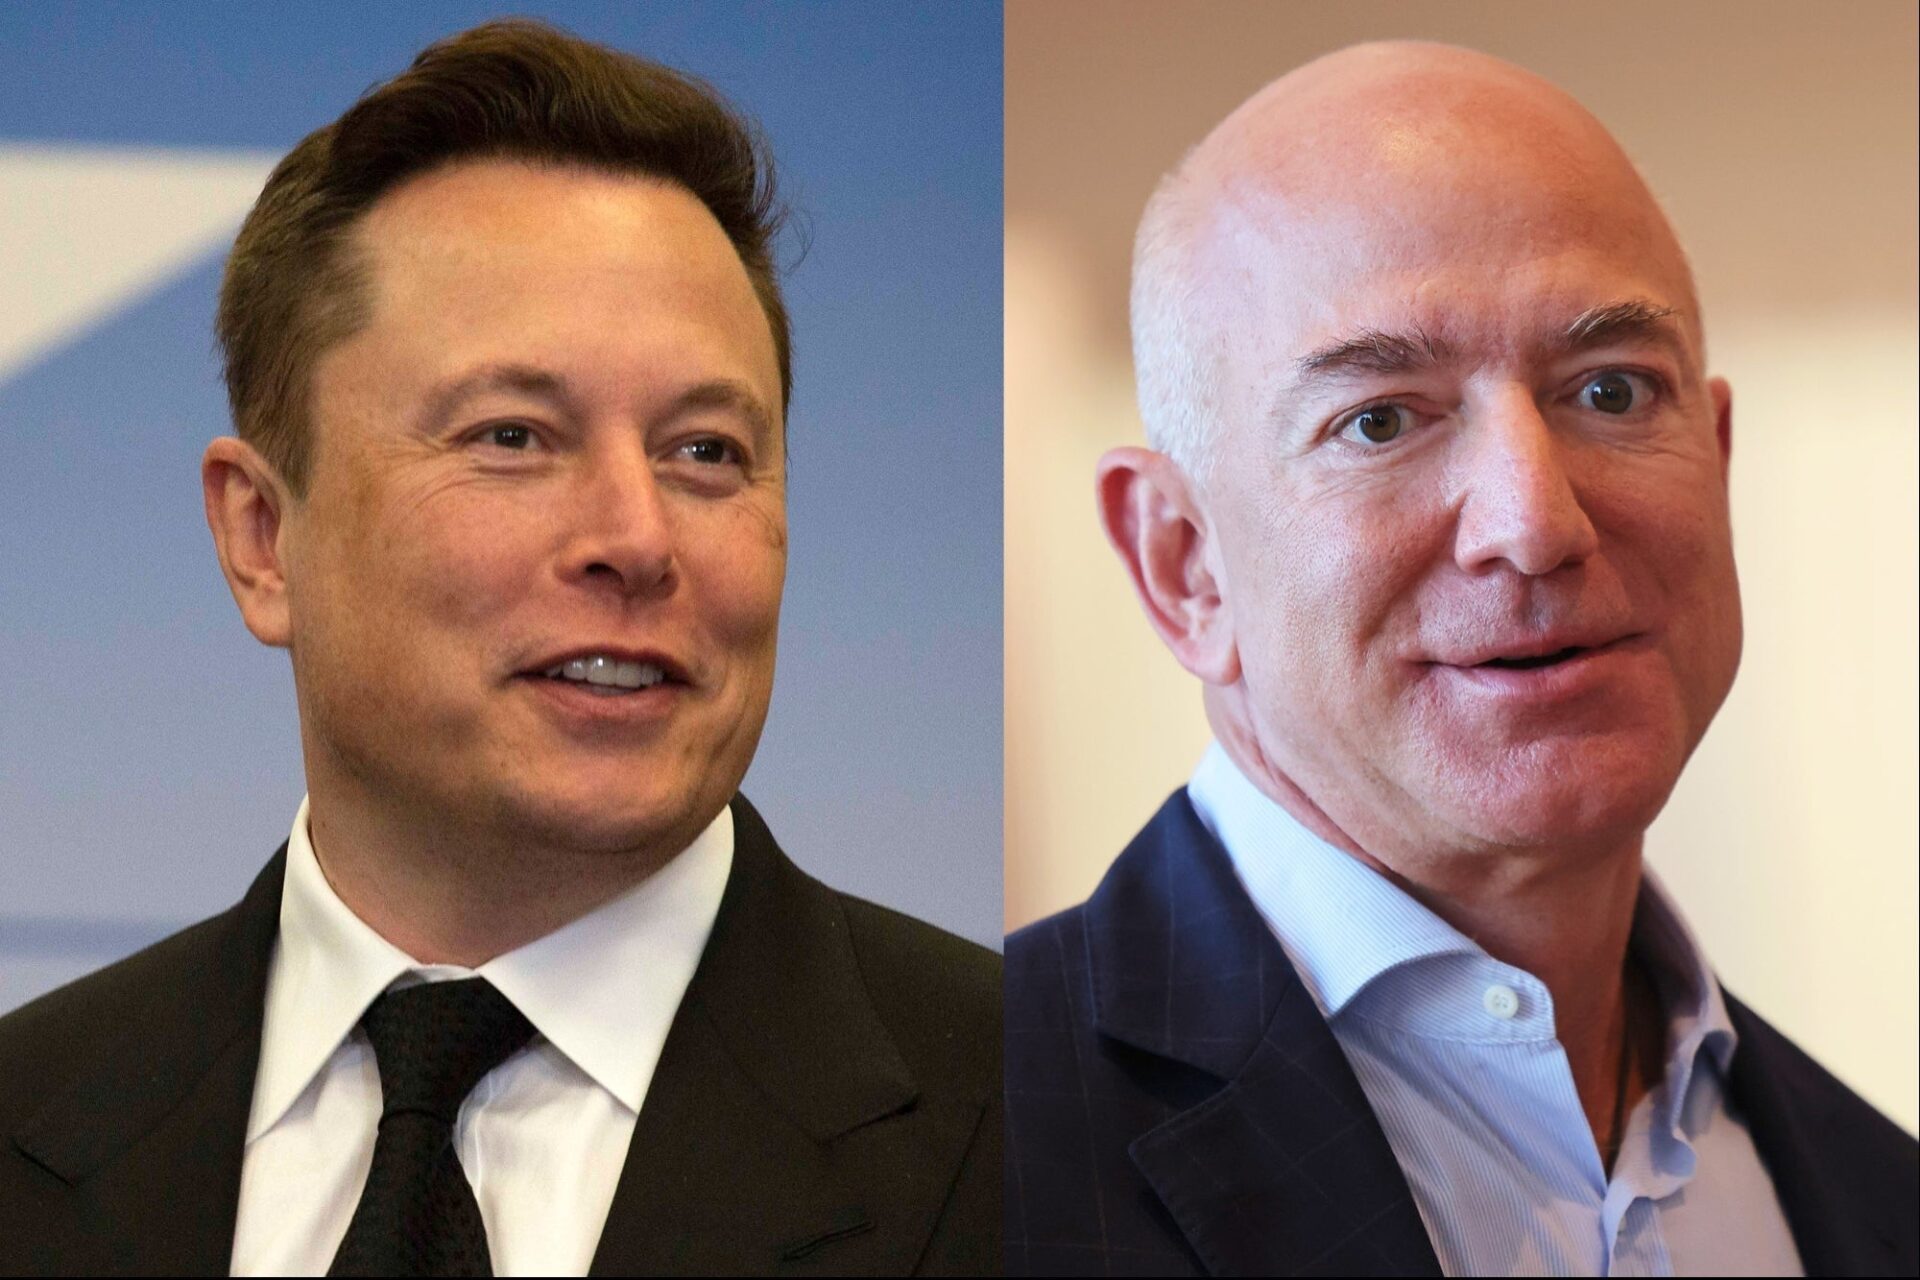 Elon Musk Becomes World's Richest Person, Surpassing Jeff Bezos